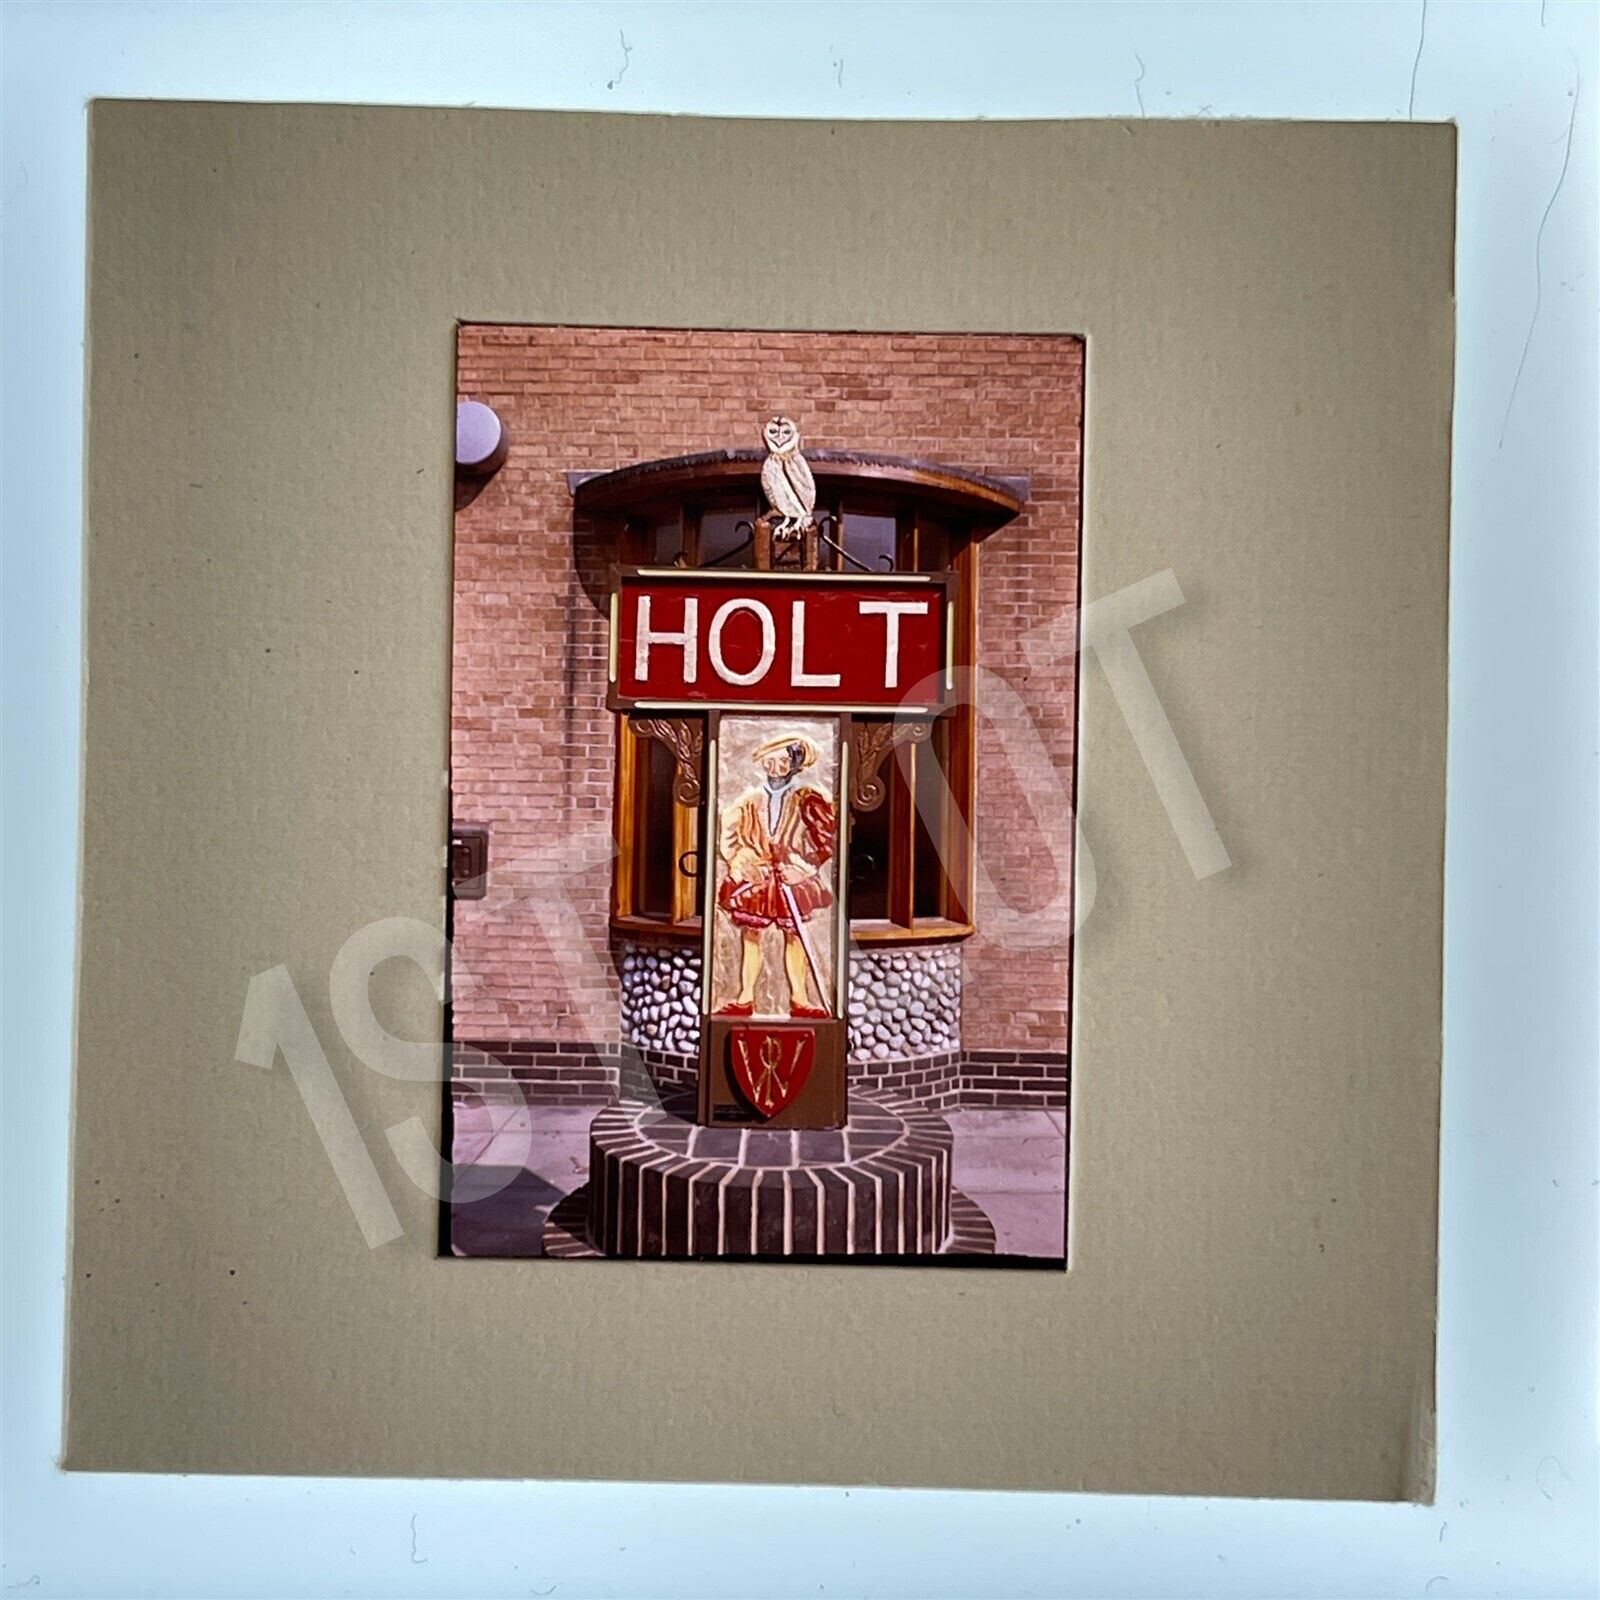 35mm Slide - Traditional Signpost Holt Vintage British Pub Scenery Advertisement